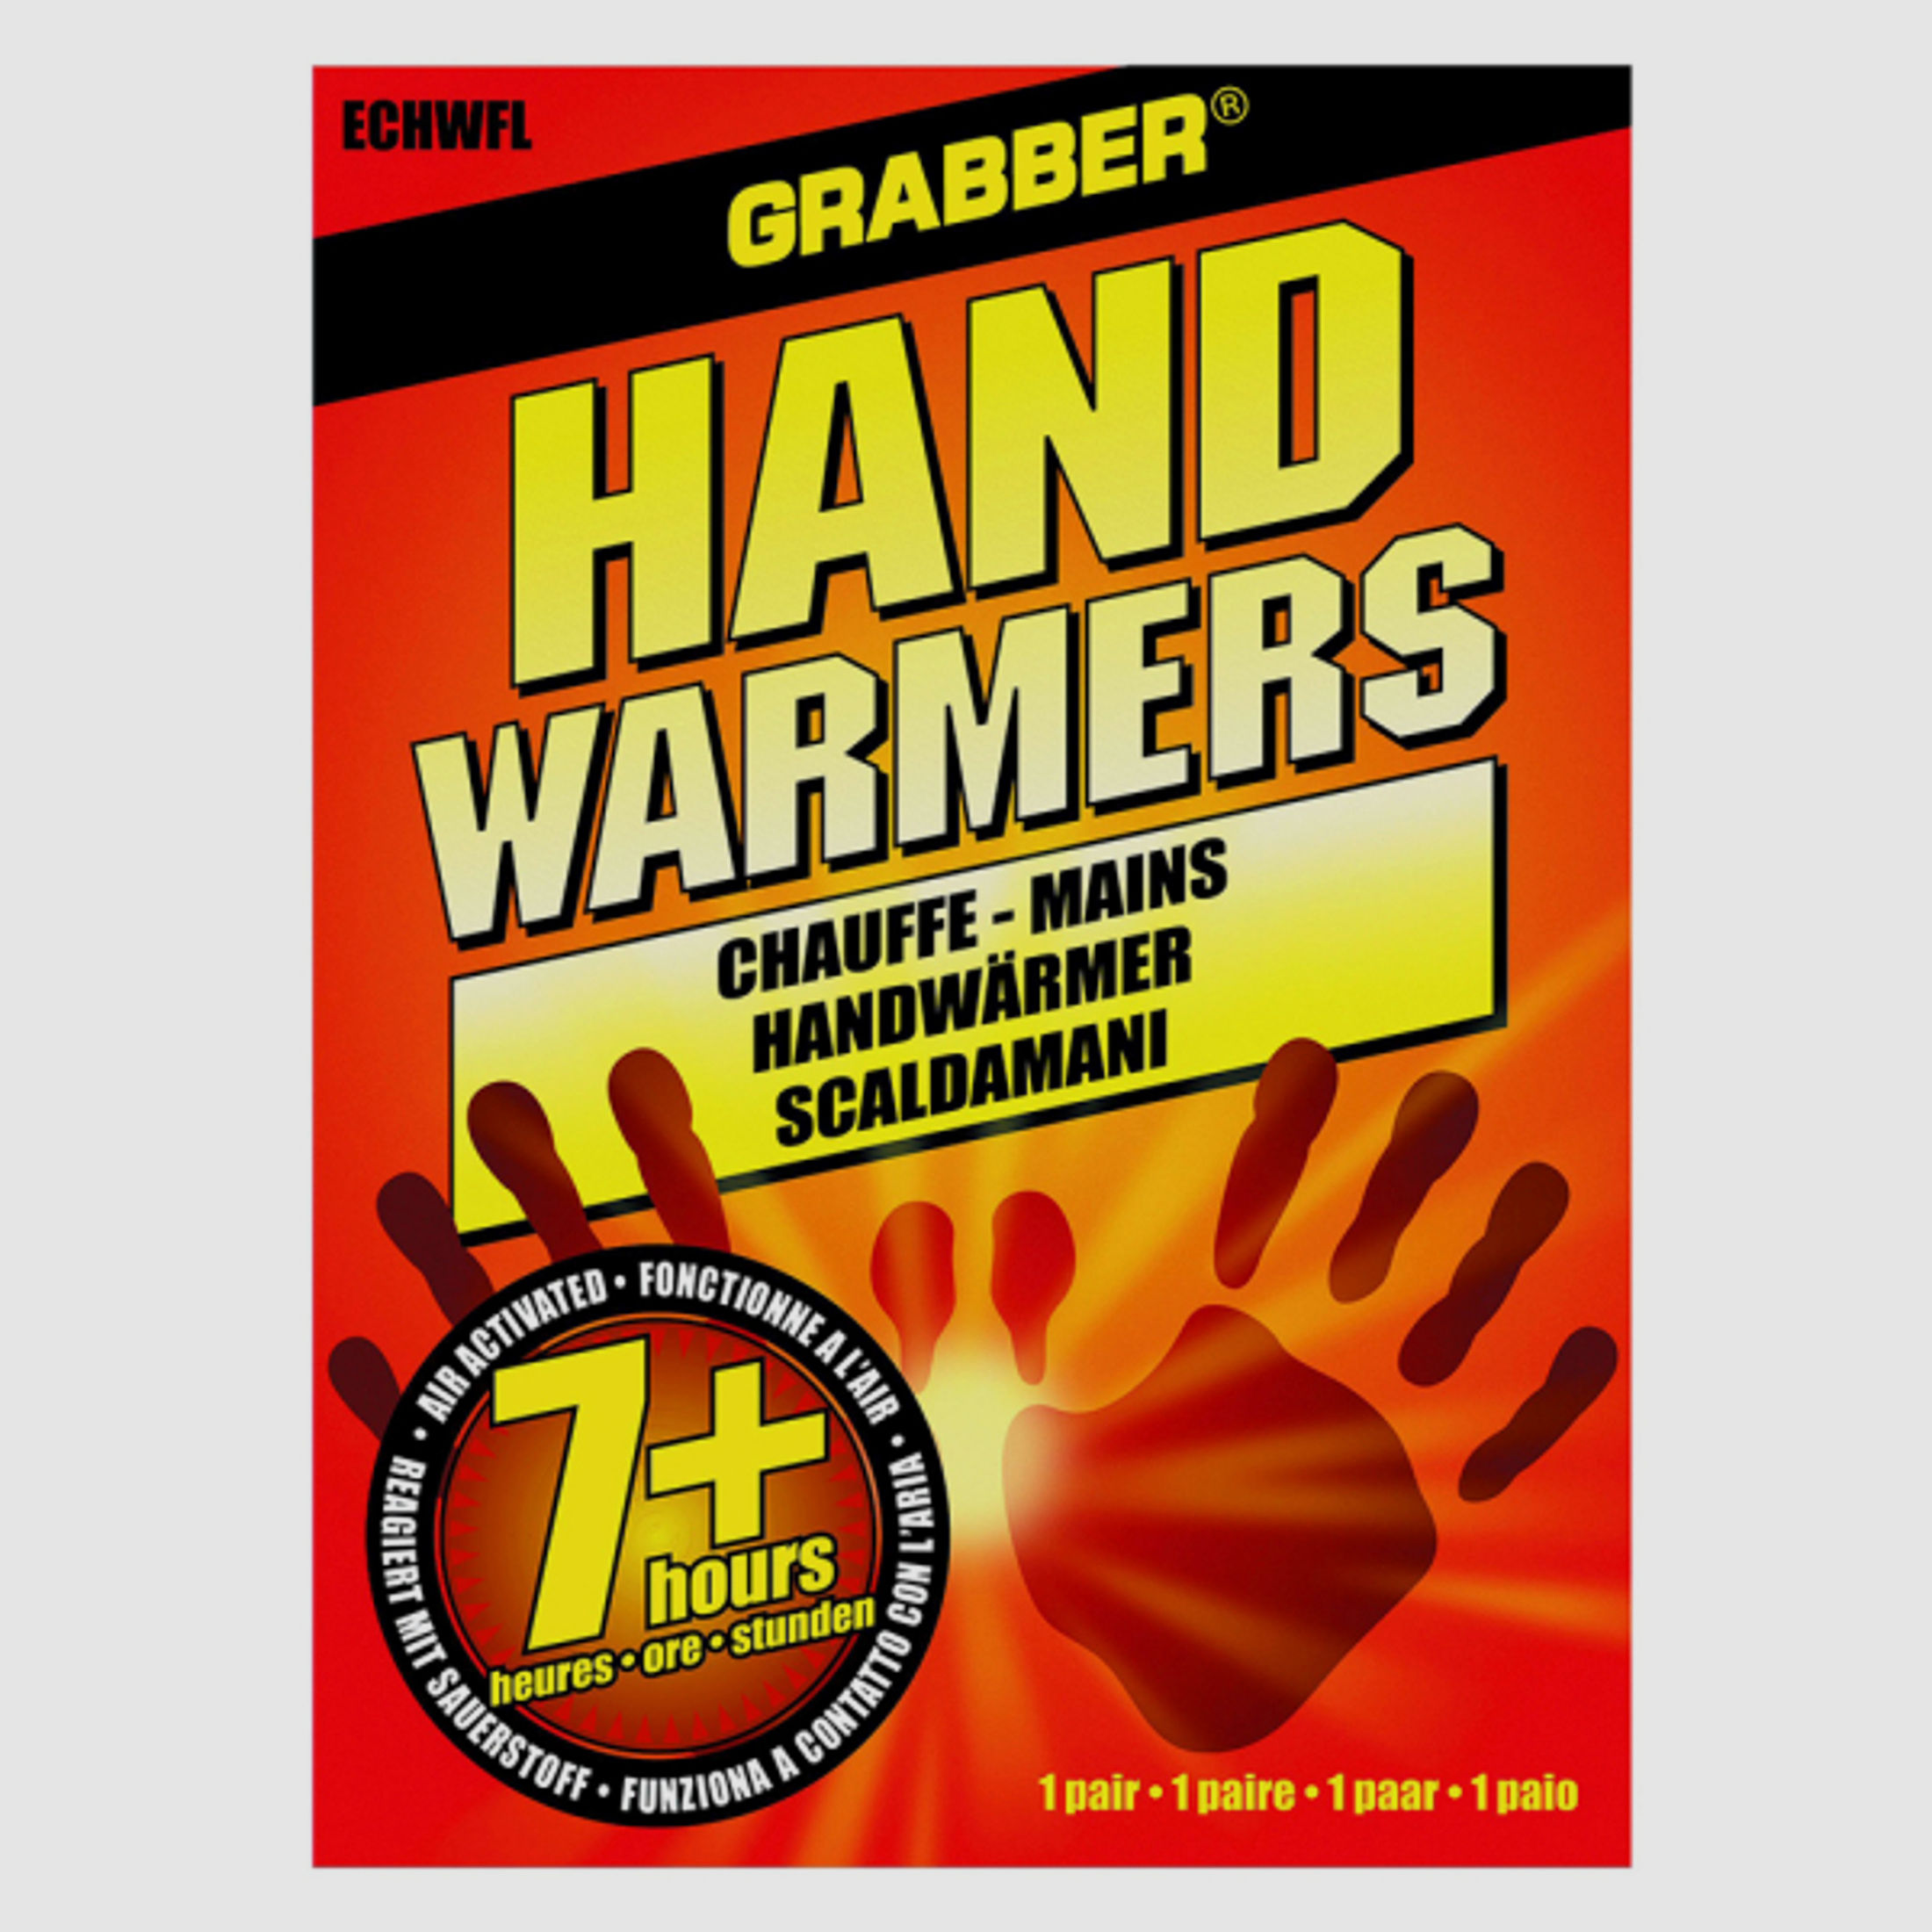 GRABBER Handwärmer | 1 Paar Wärmepads 7h Stunden 57 - 70° Grad Wärme | Aktivkohle Eisen Salz | NEU!